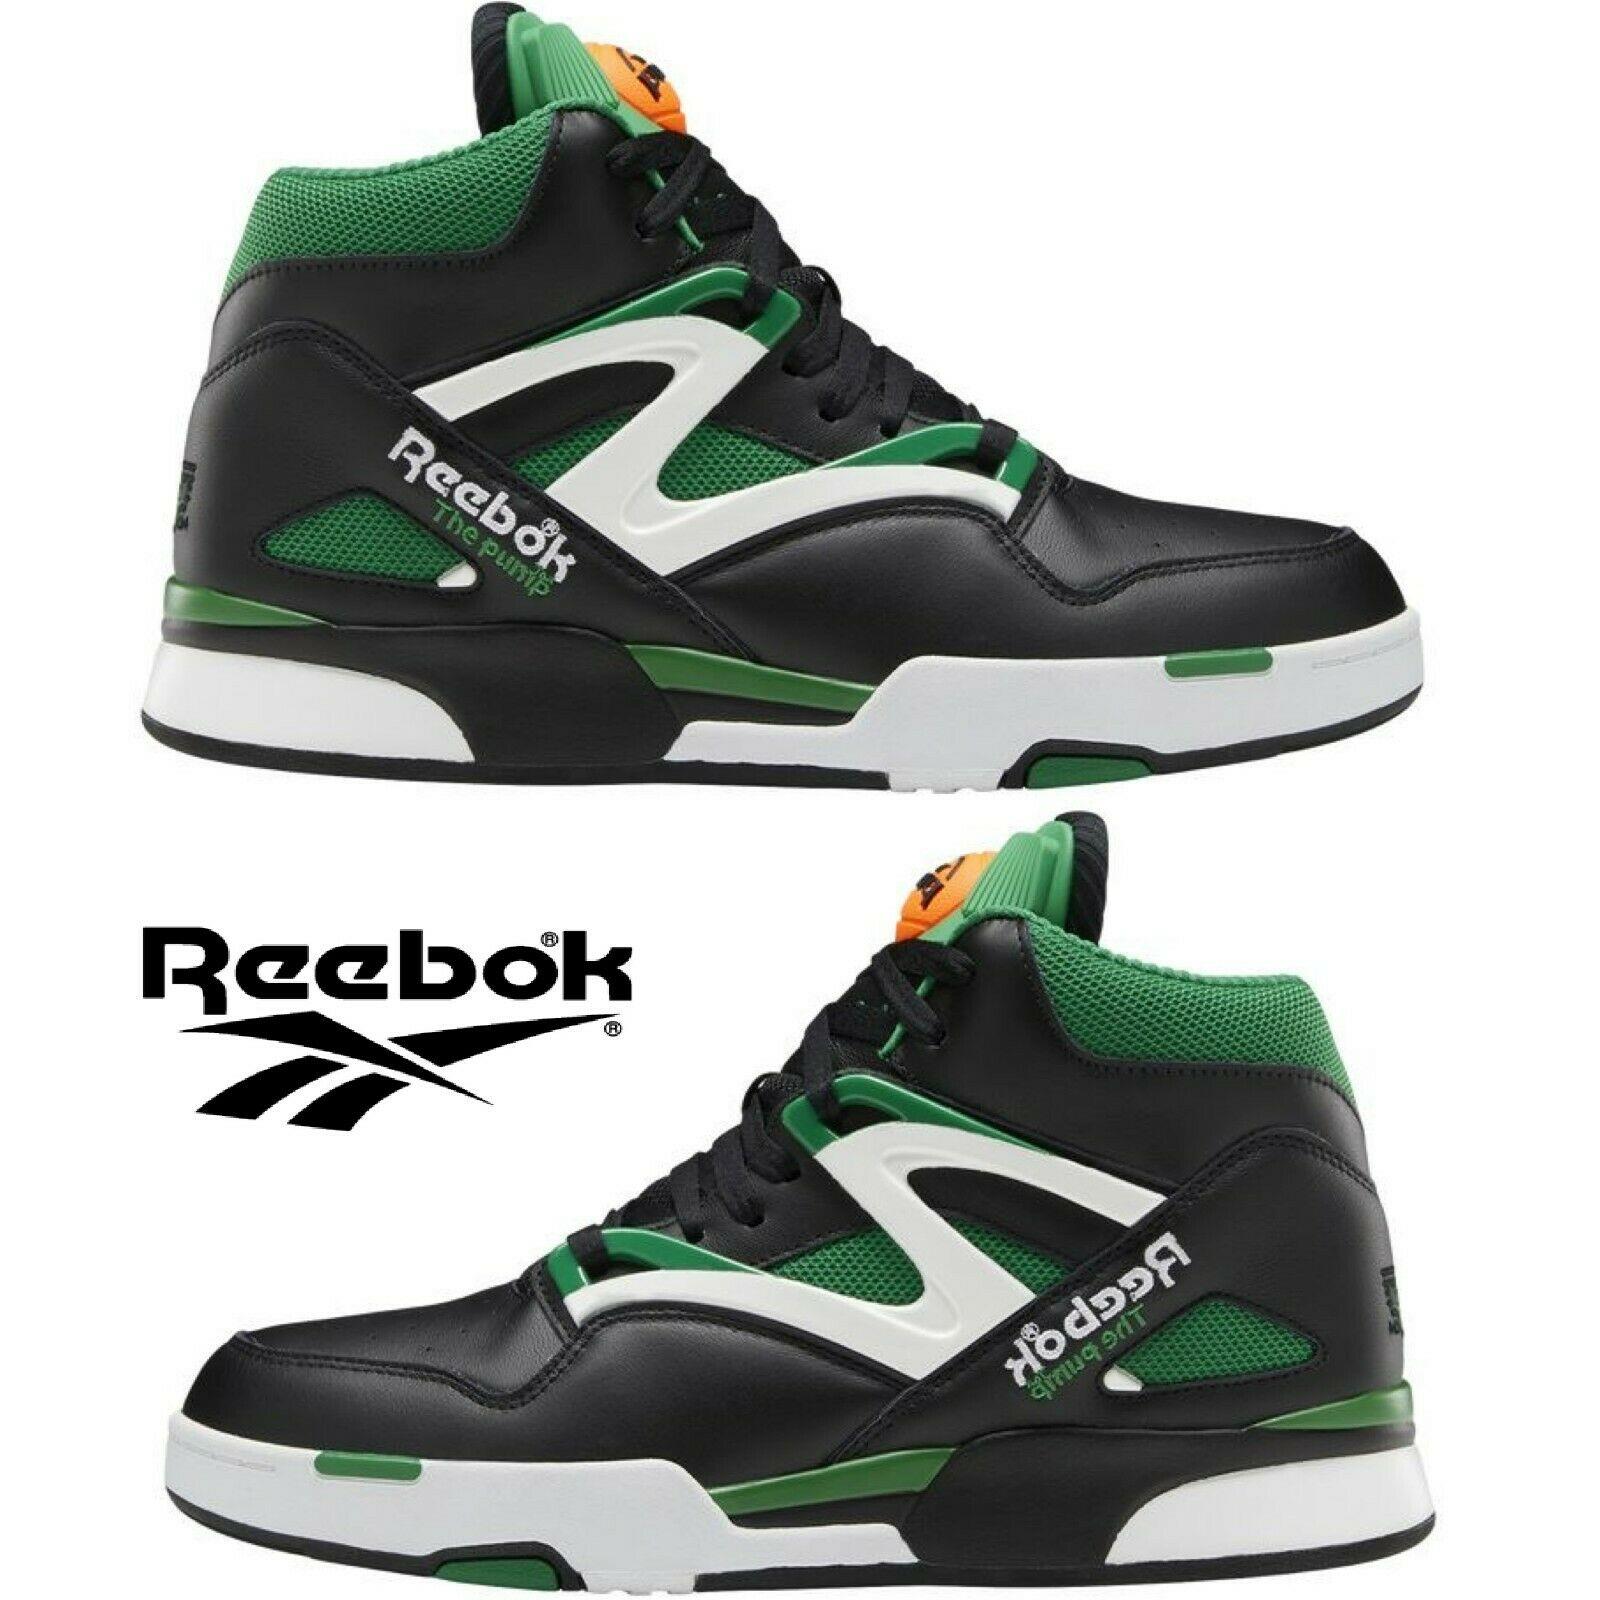 Reebok Pump Omni Basketball Shoes Men`s Sneakers Running Casual Sport Black